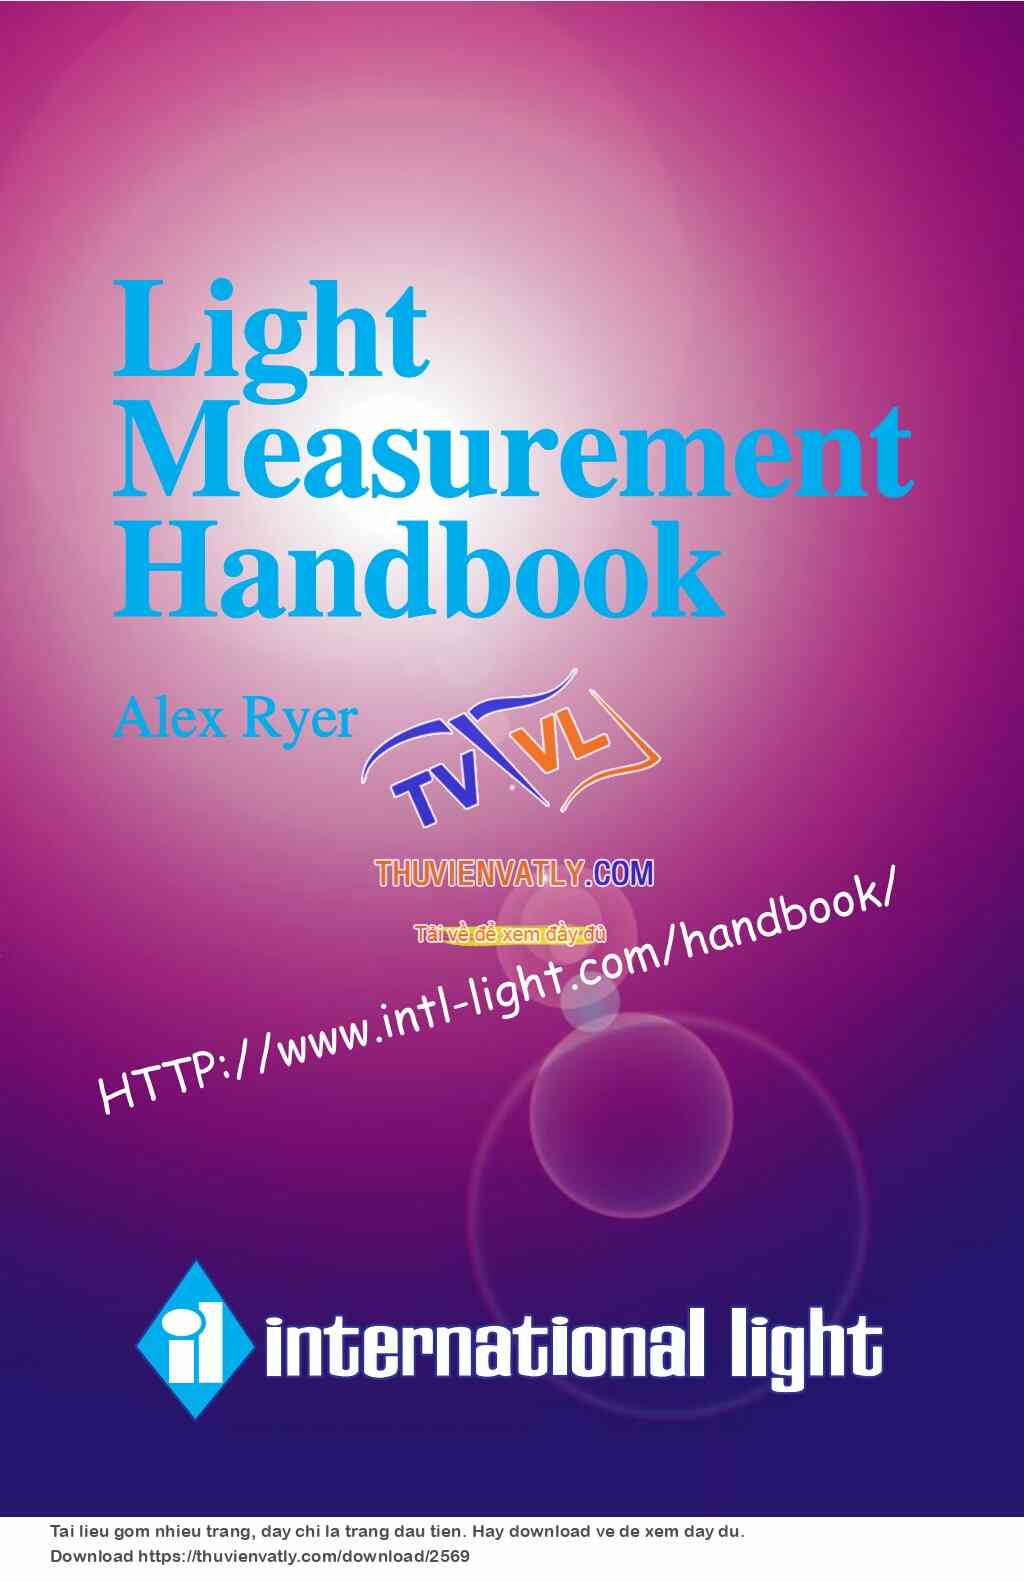 Light Measurement Handbook (Alex Ryer)